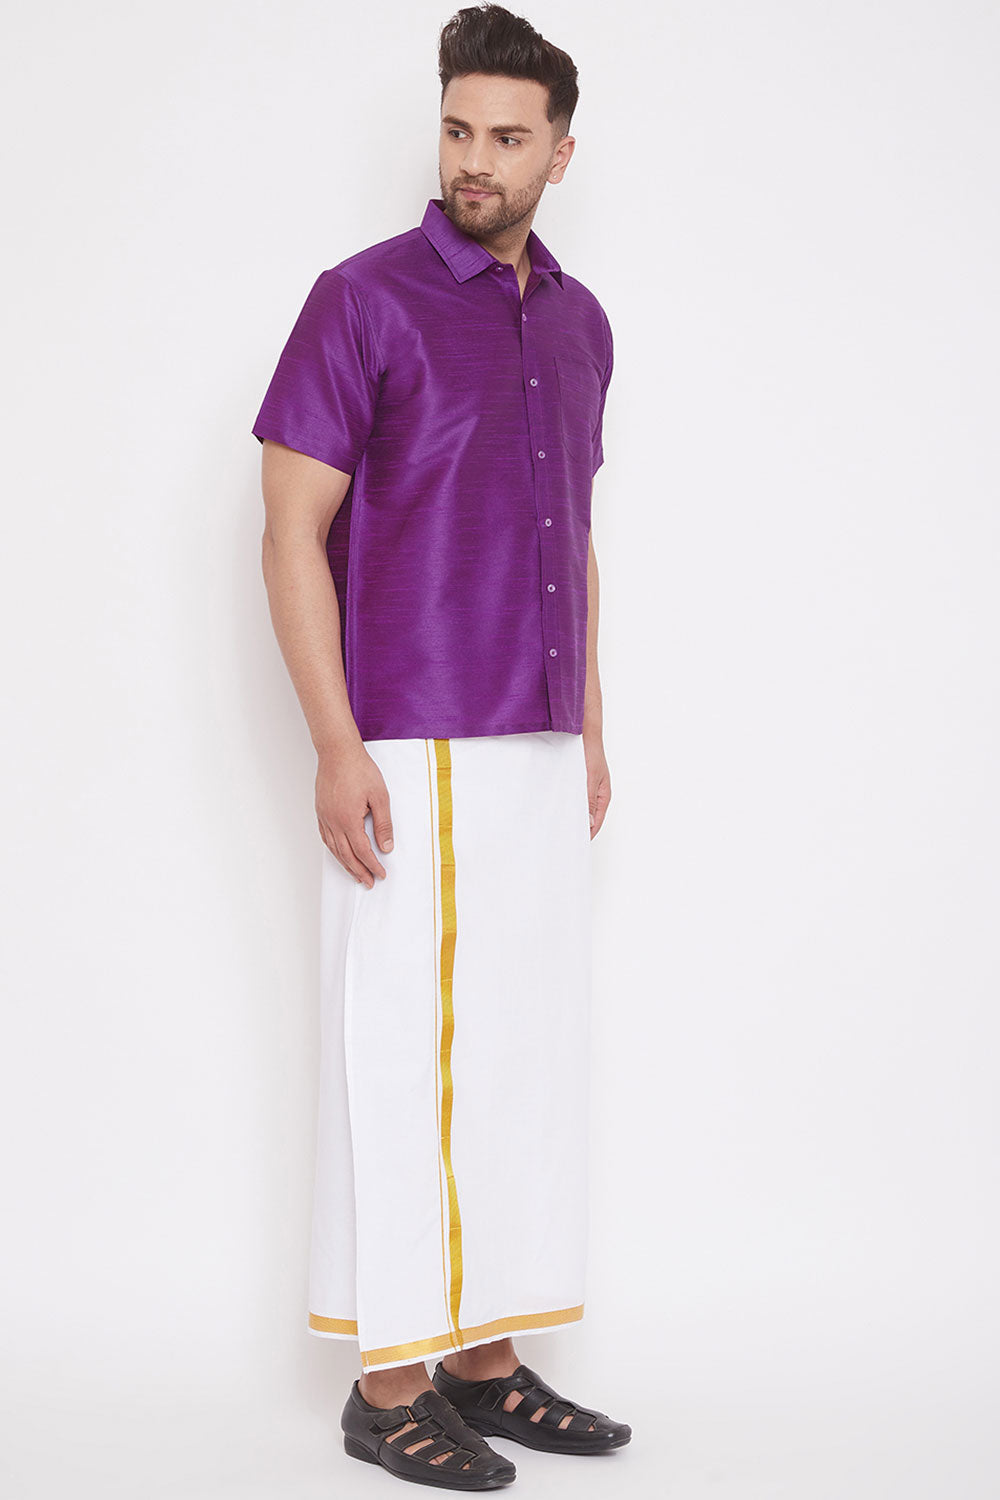 Art Silk Solid Purple Shirt and Mundu